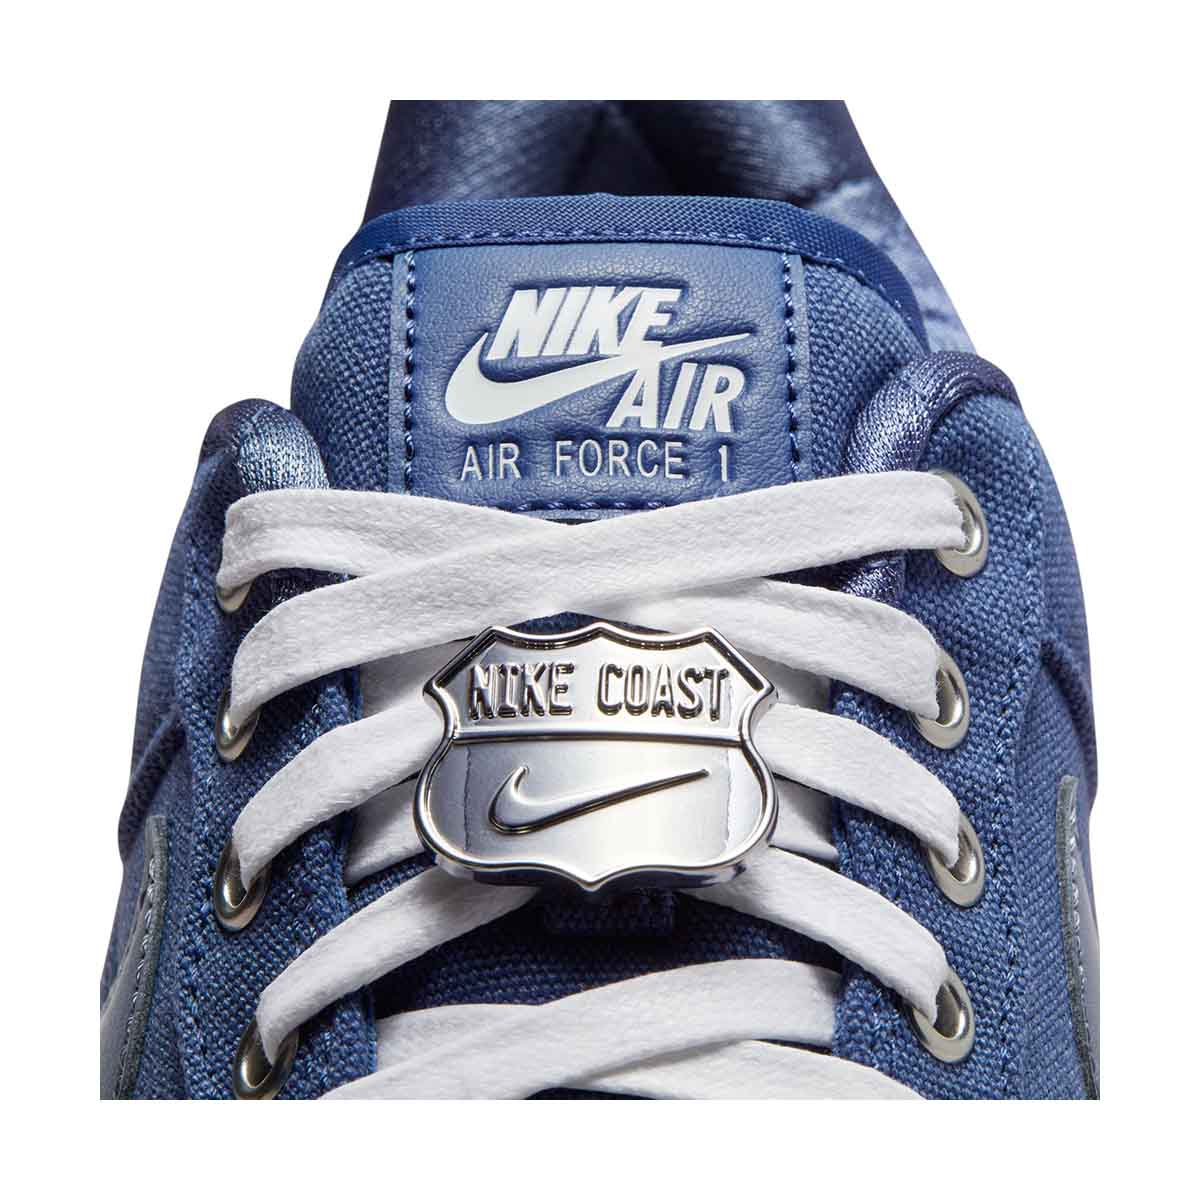 Nike Air Force 1 Low Premium iD (Memphis Grizzlies) Men's Shoe